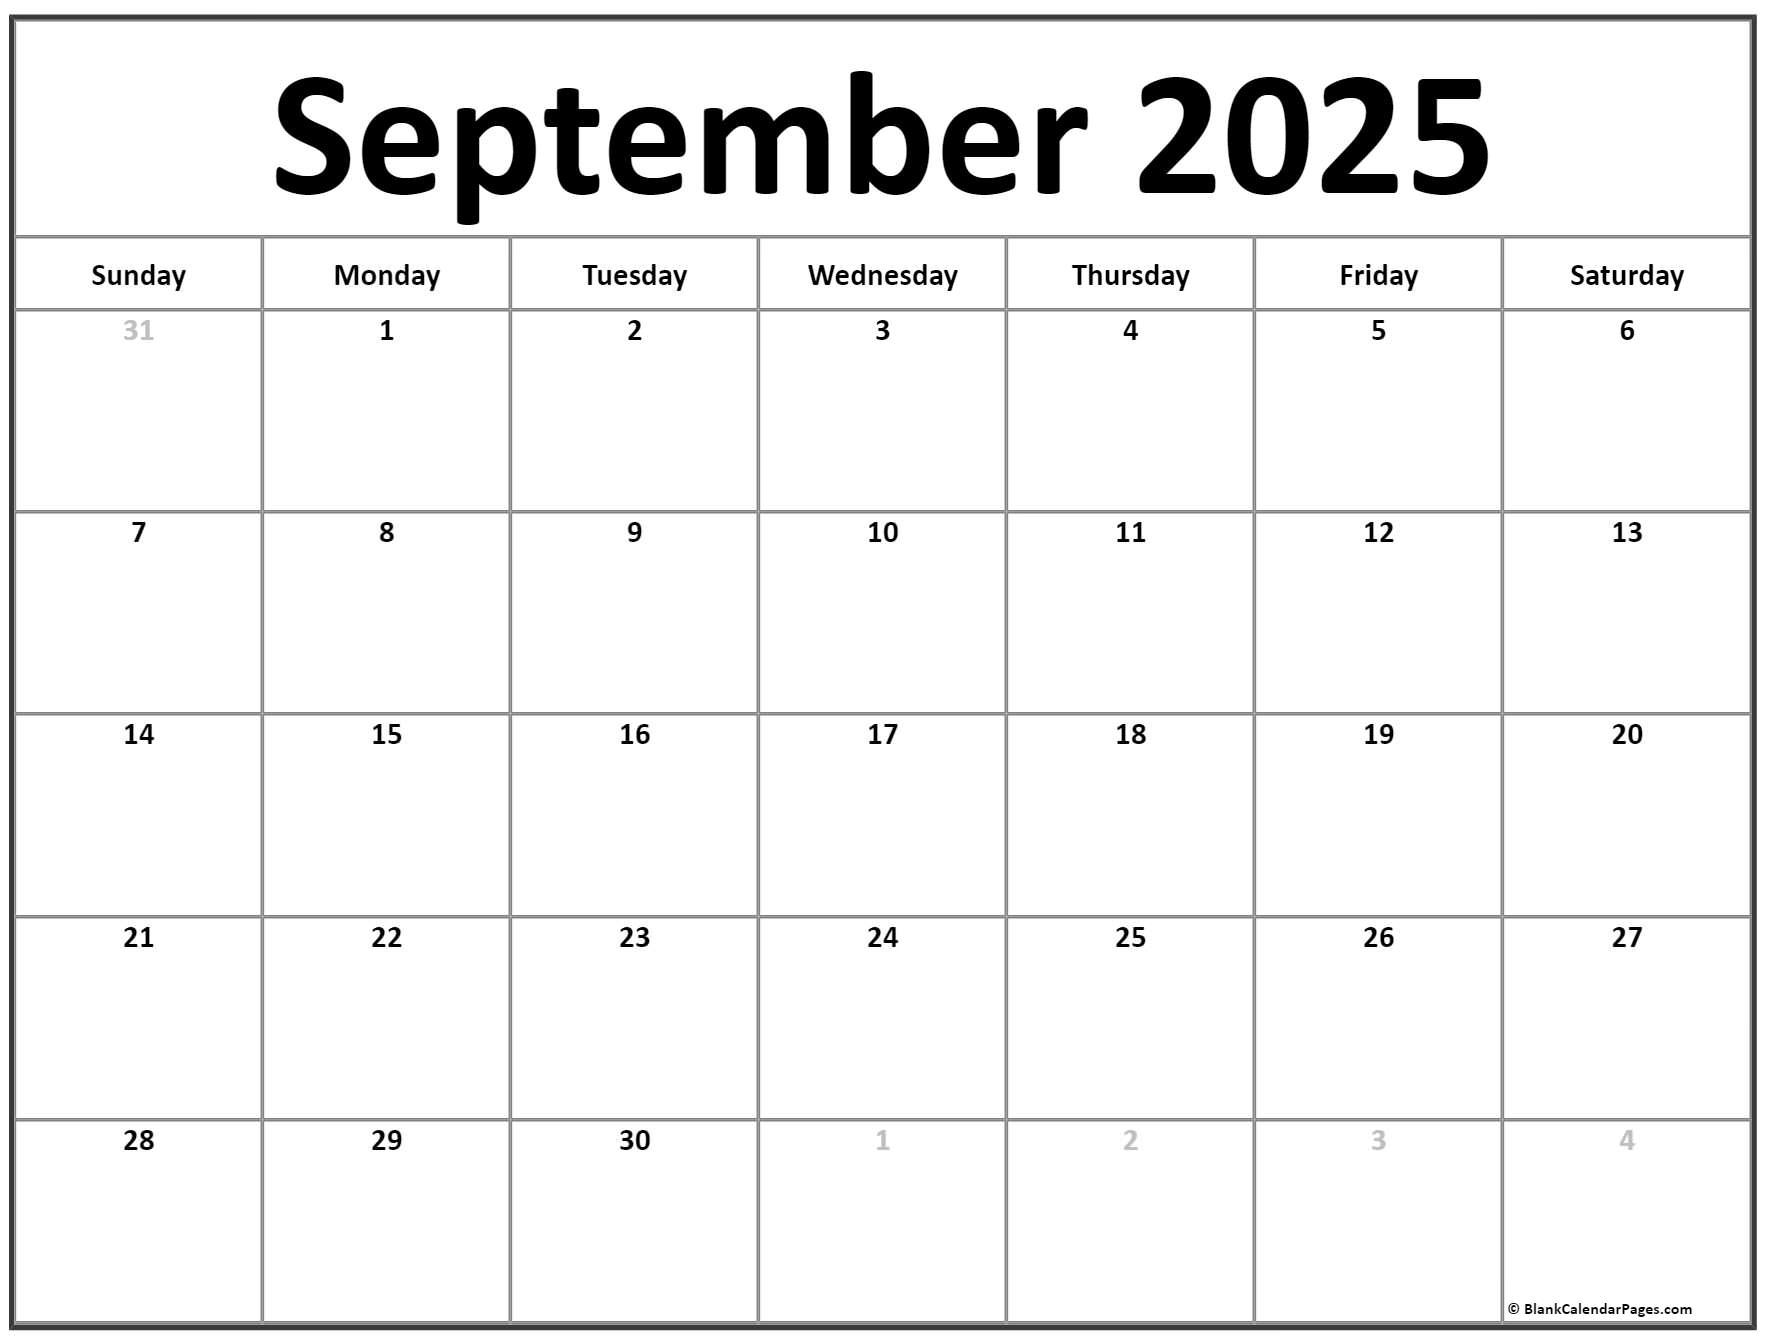 september-2025-calendar-with-holidays-handy-calendars